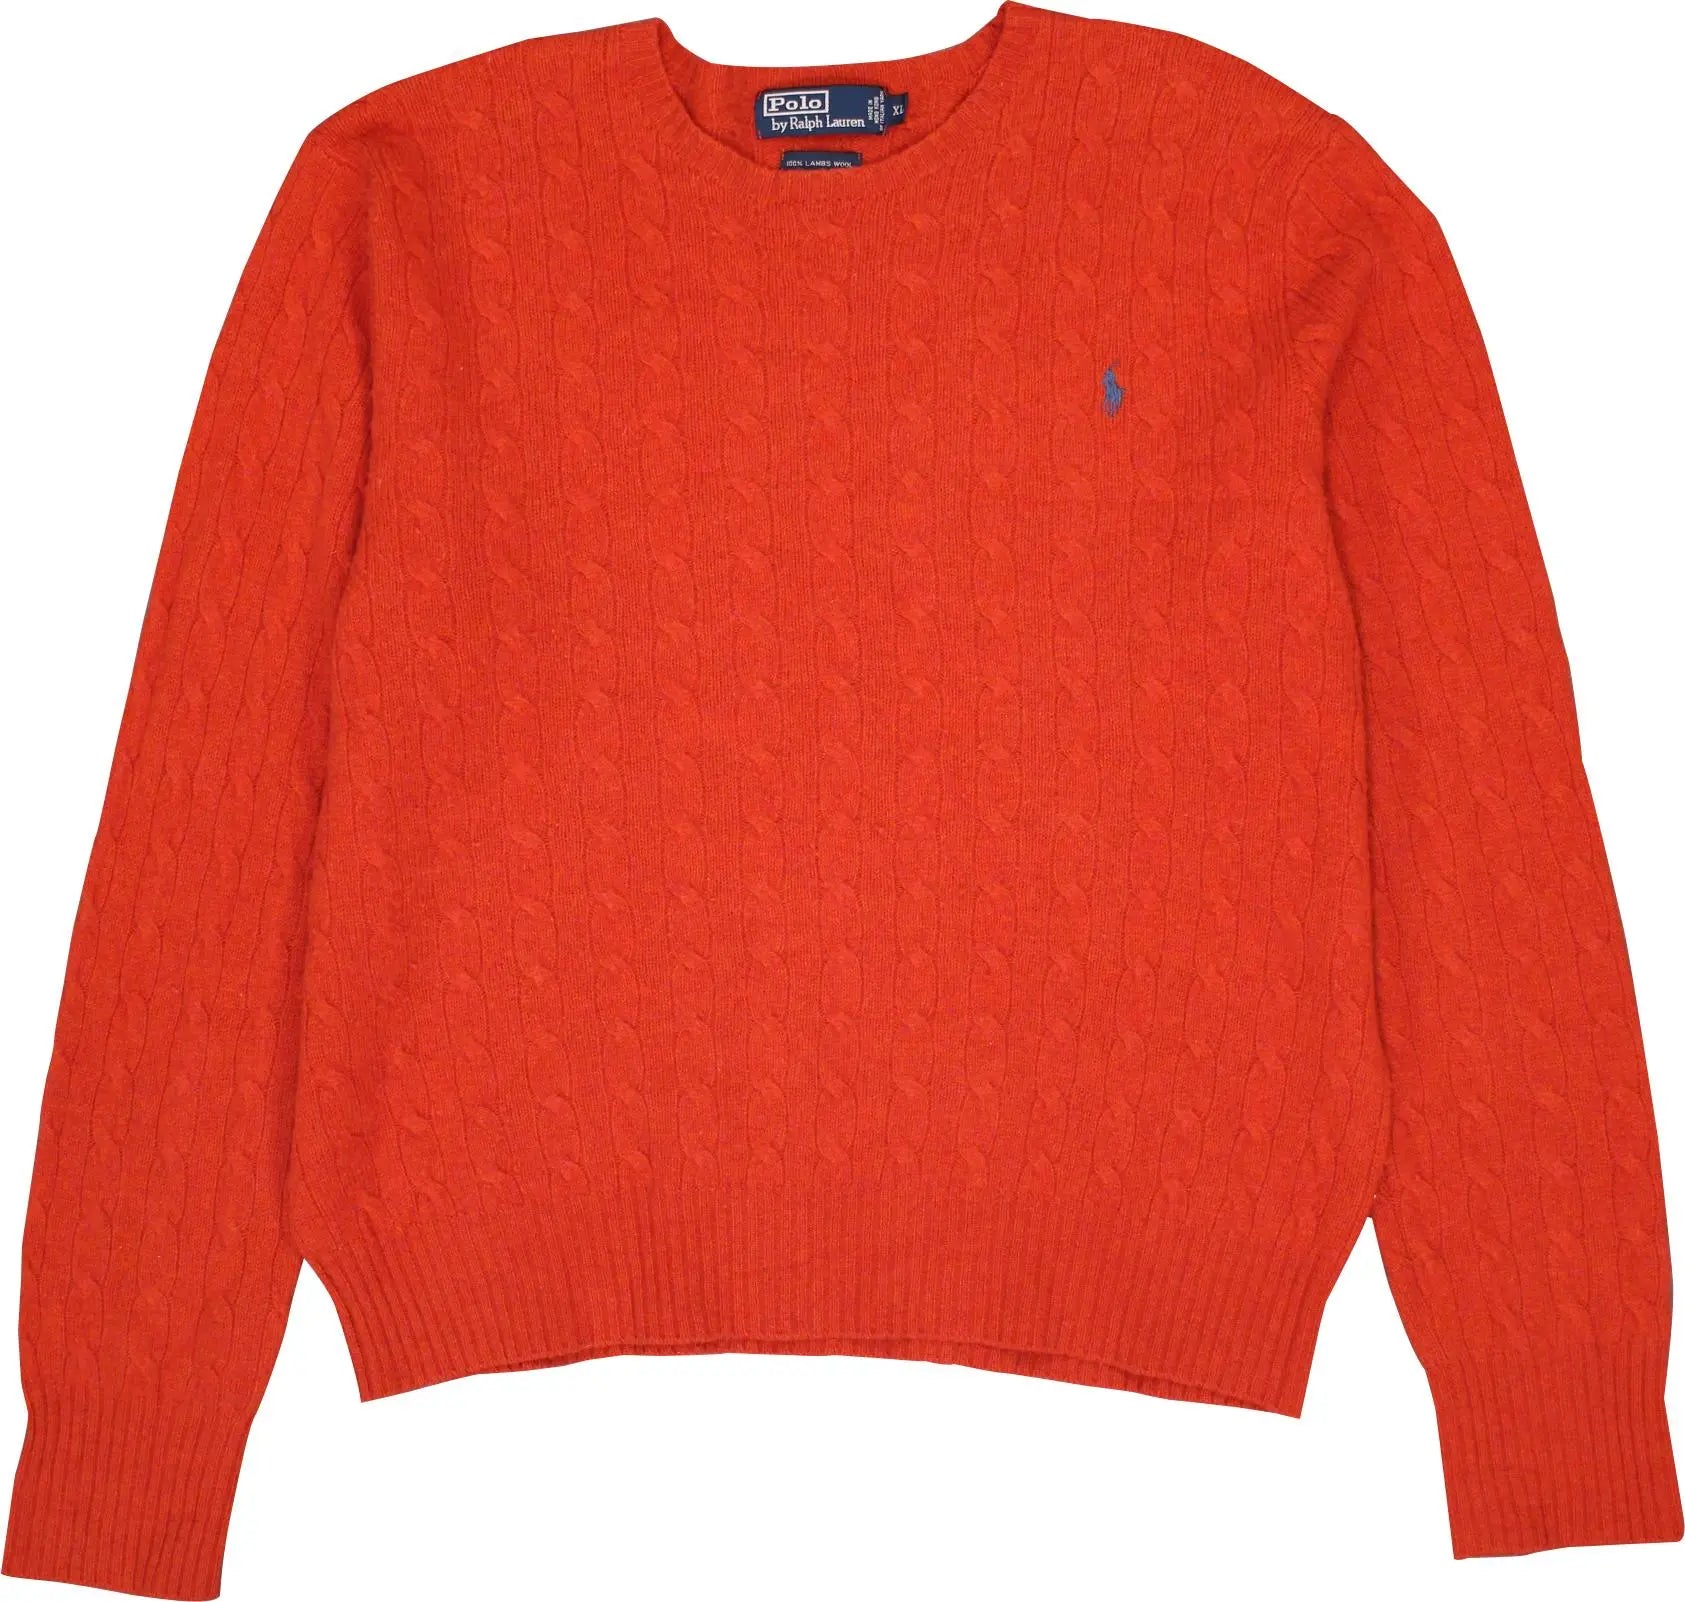 Ralph Lauren - Orange Pure Wool Sweater by Ralph Lauren- ThriftTale.com - Vintage and second handclothing